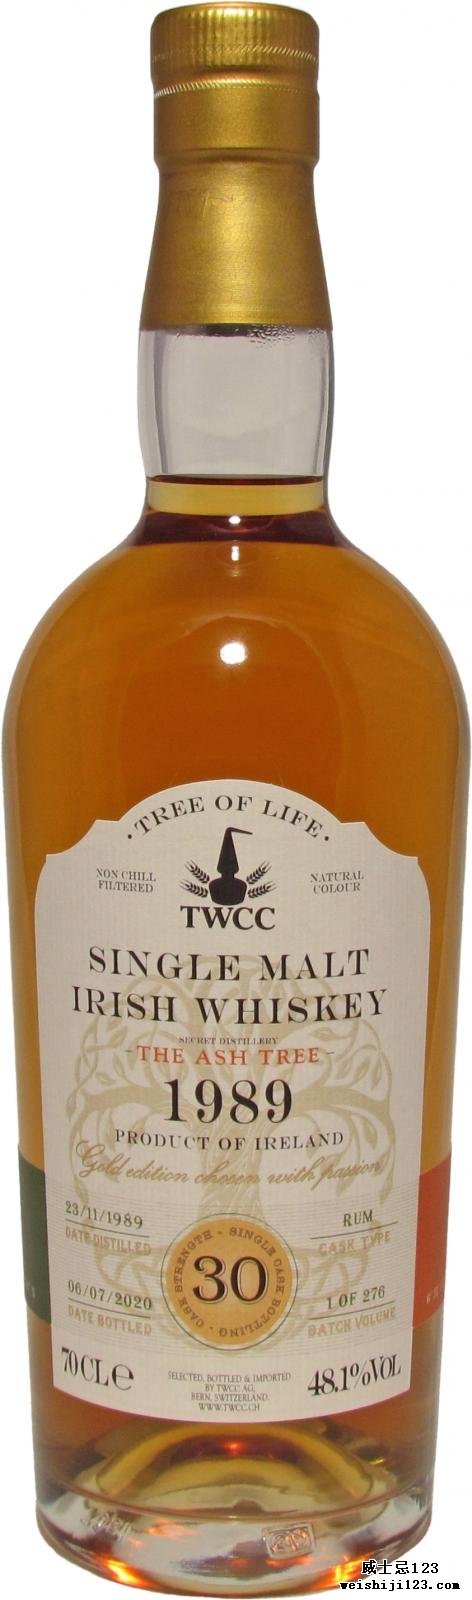 Single Malt Irish Whiskey 1989 - The Ash Tree TWCC